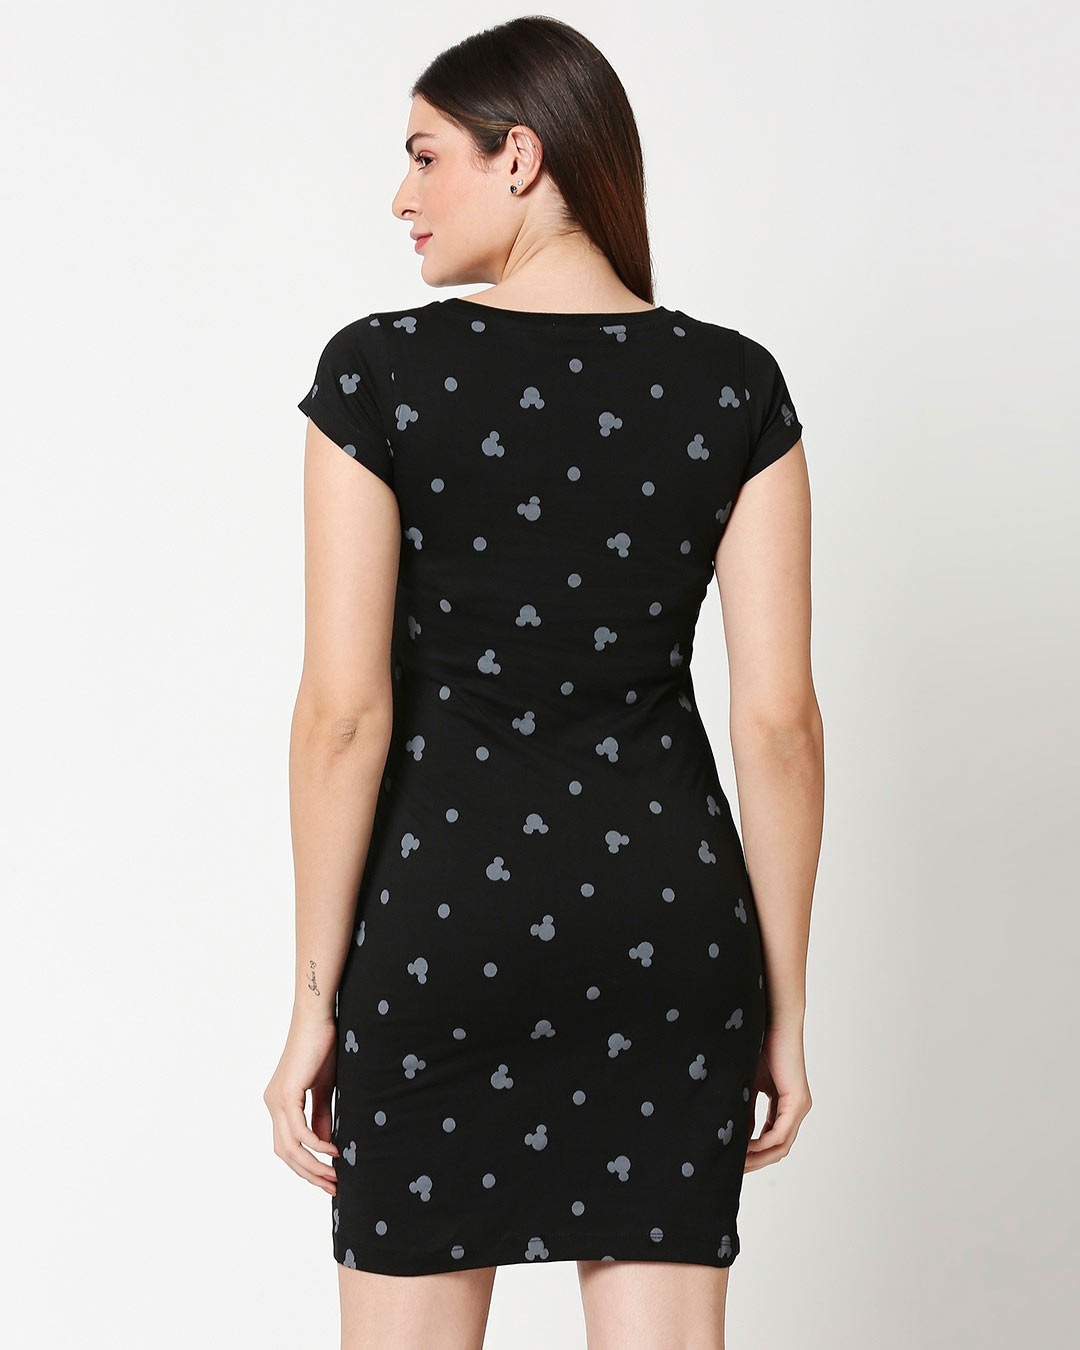 Shop Mickey silhouette AOP Dress(DL)-Full